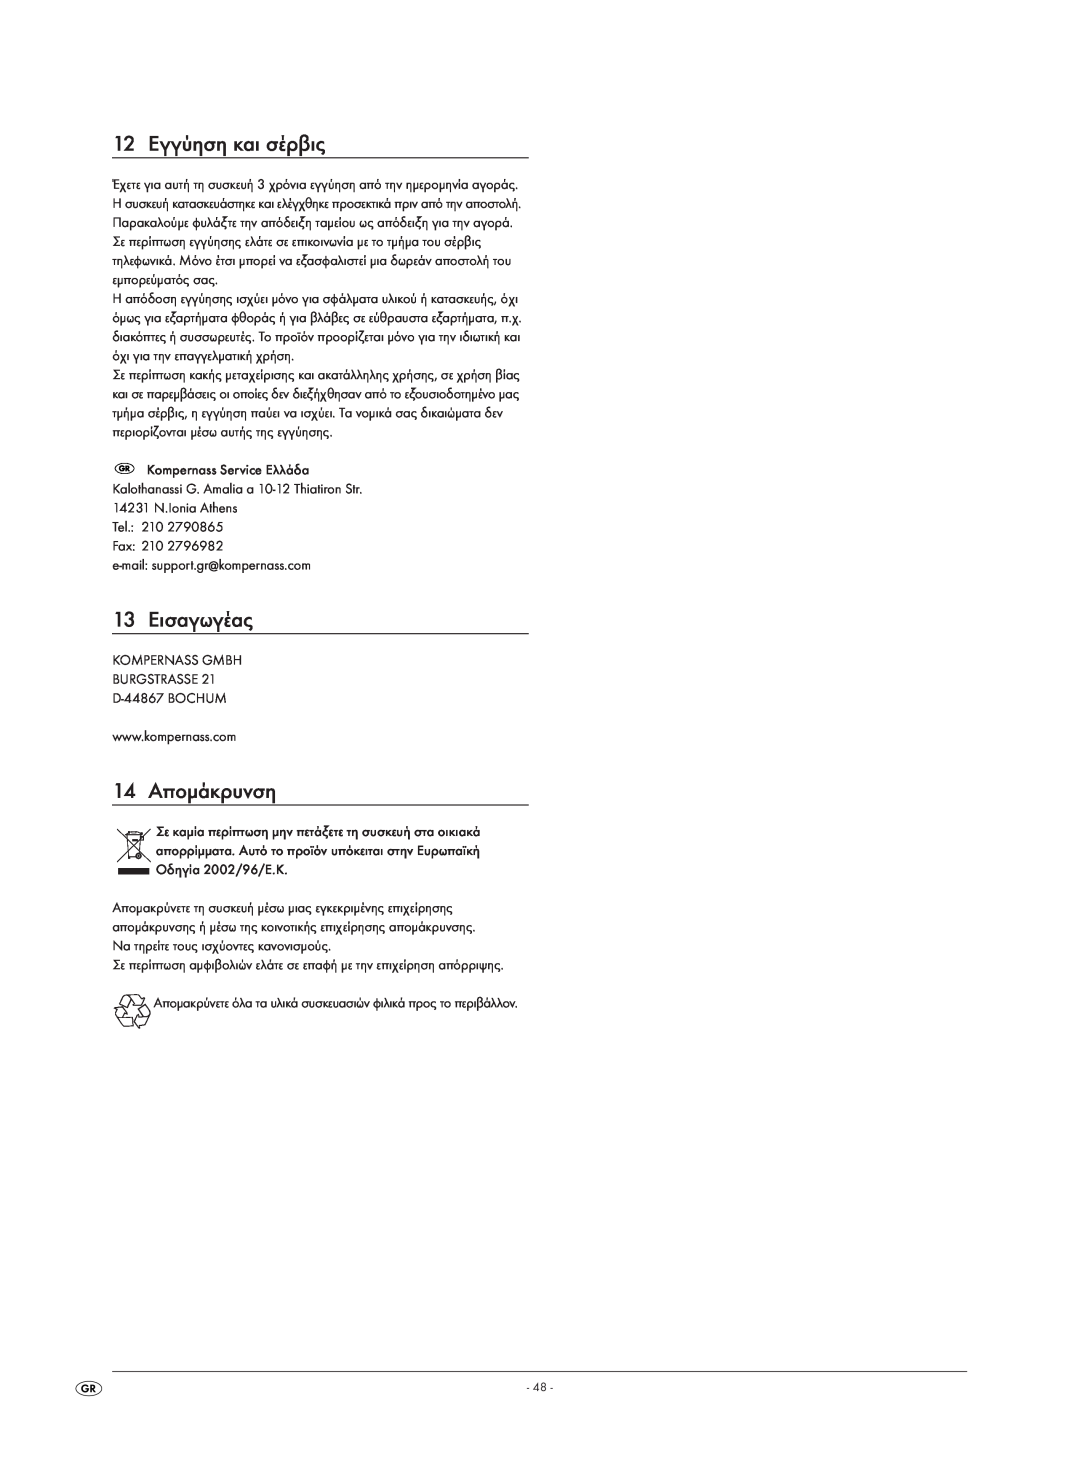 Kompernass KH 1150 manual 12 Εγγύηση και σέρβις, 13 Εισαγωγέας, 14 Απομάκρυνση 